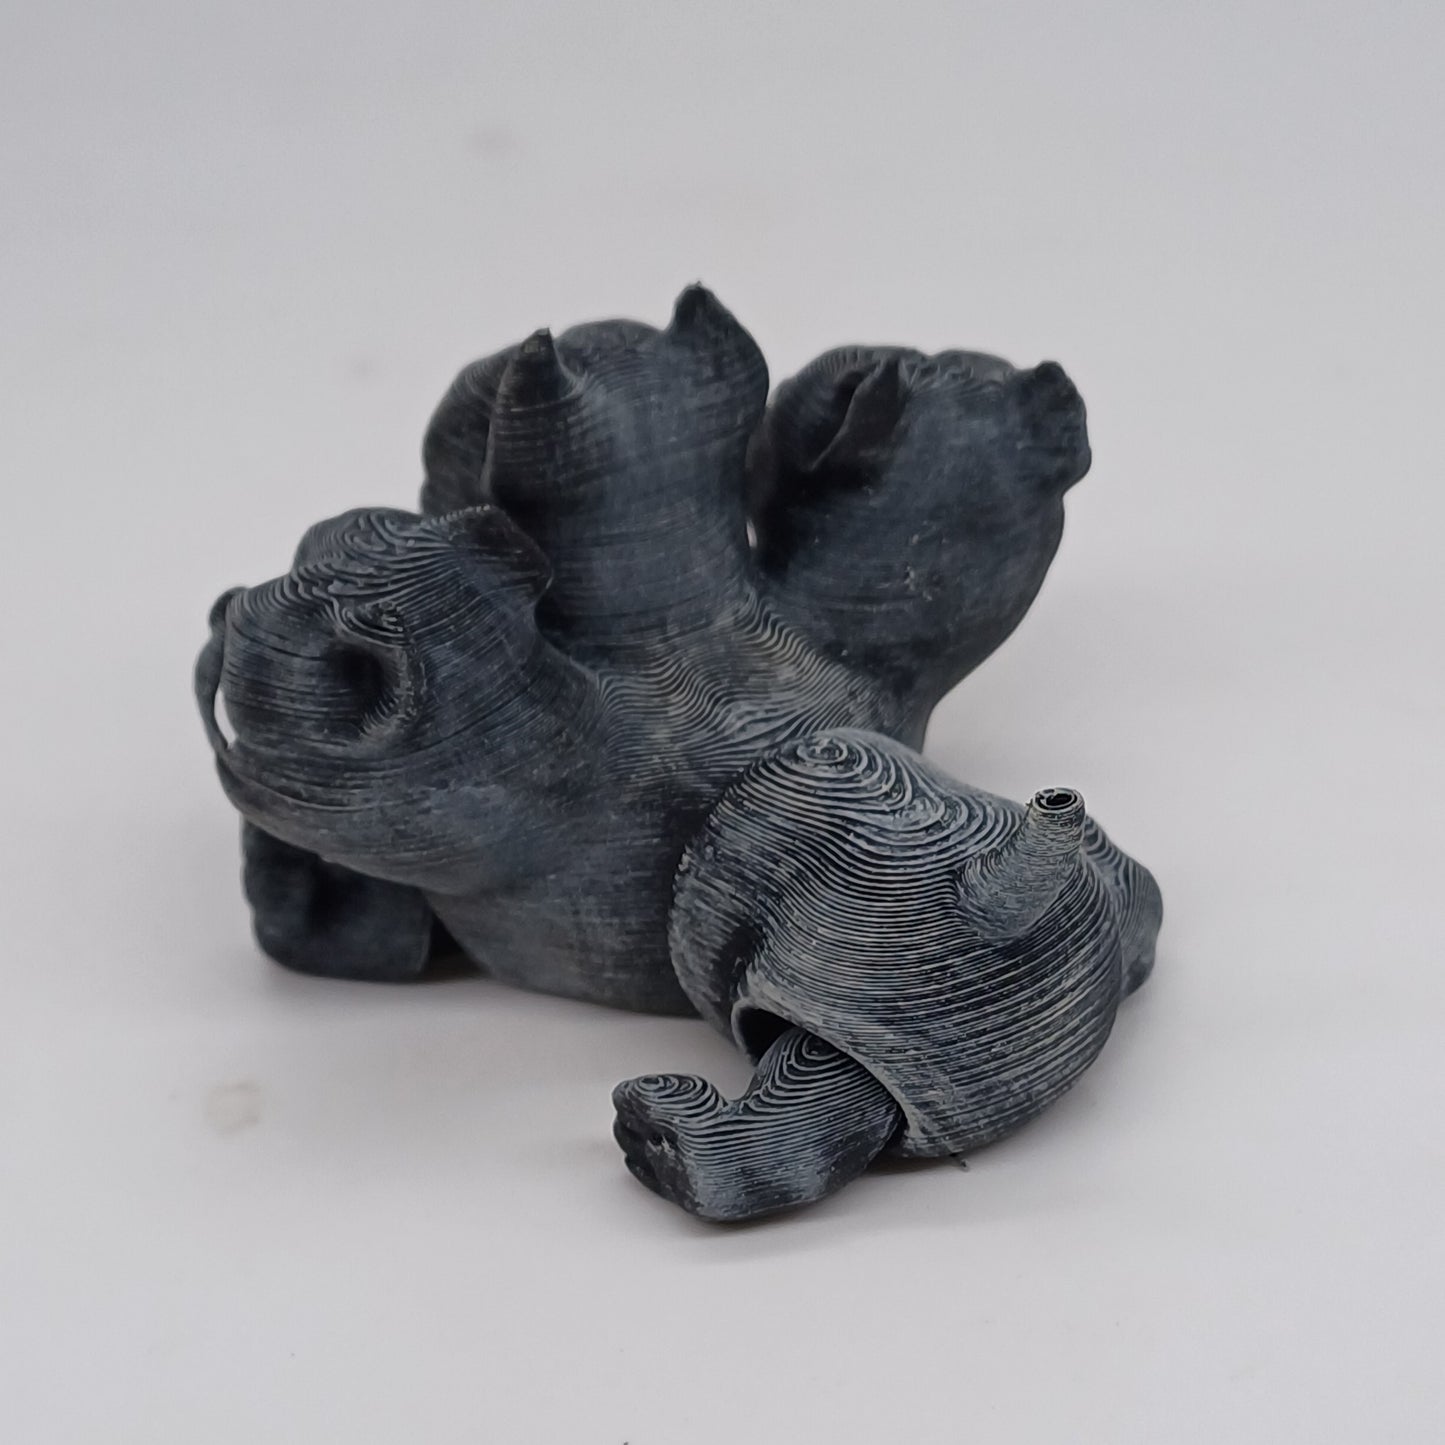 Kerberos Hund mit Tür im Maßstab 1:12 - Miniaturen